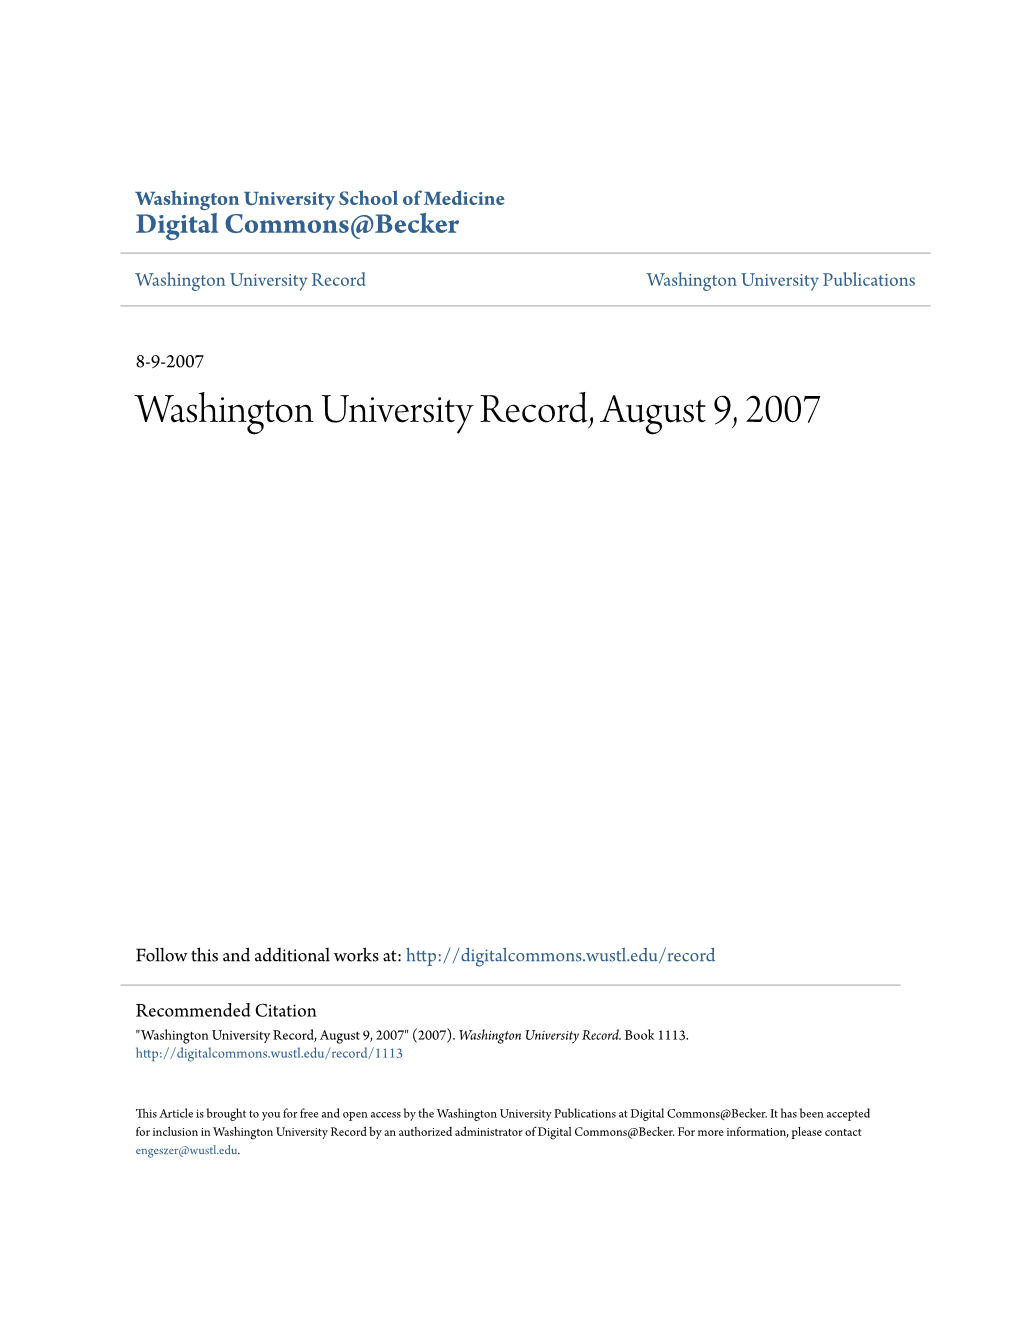 Washington University Record, August 9, 2007